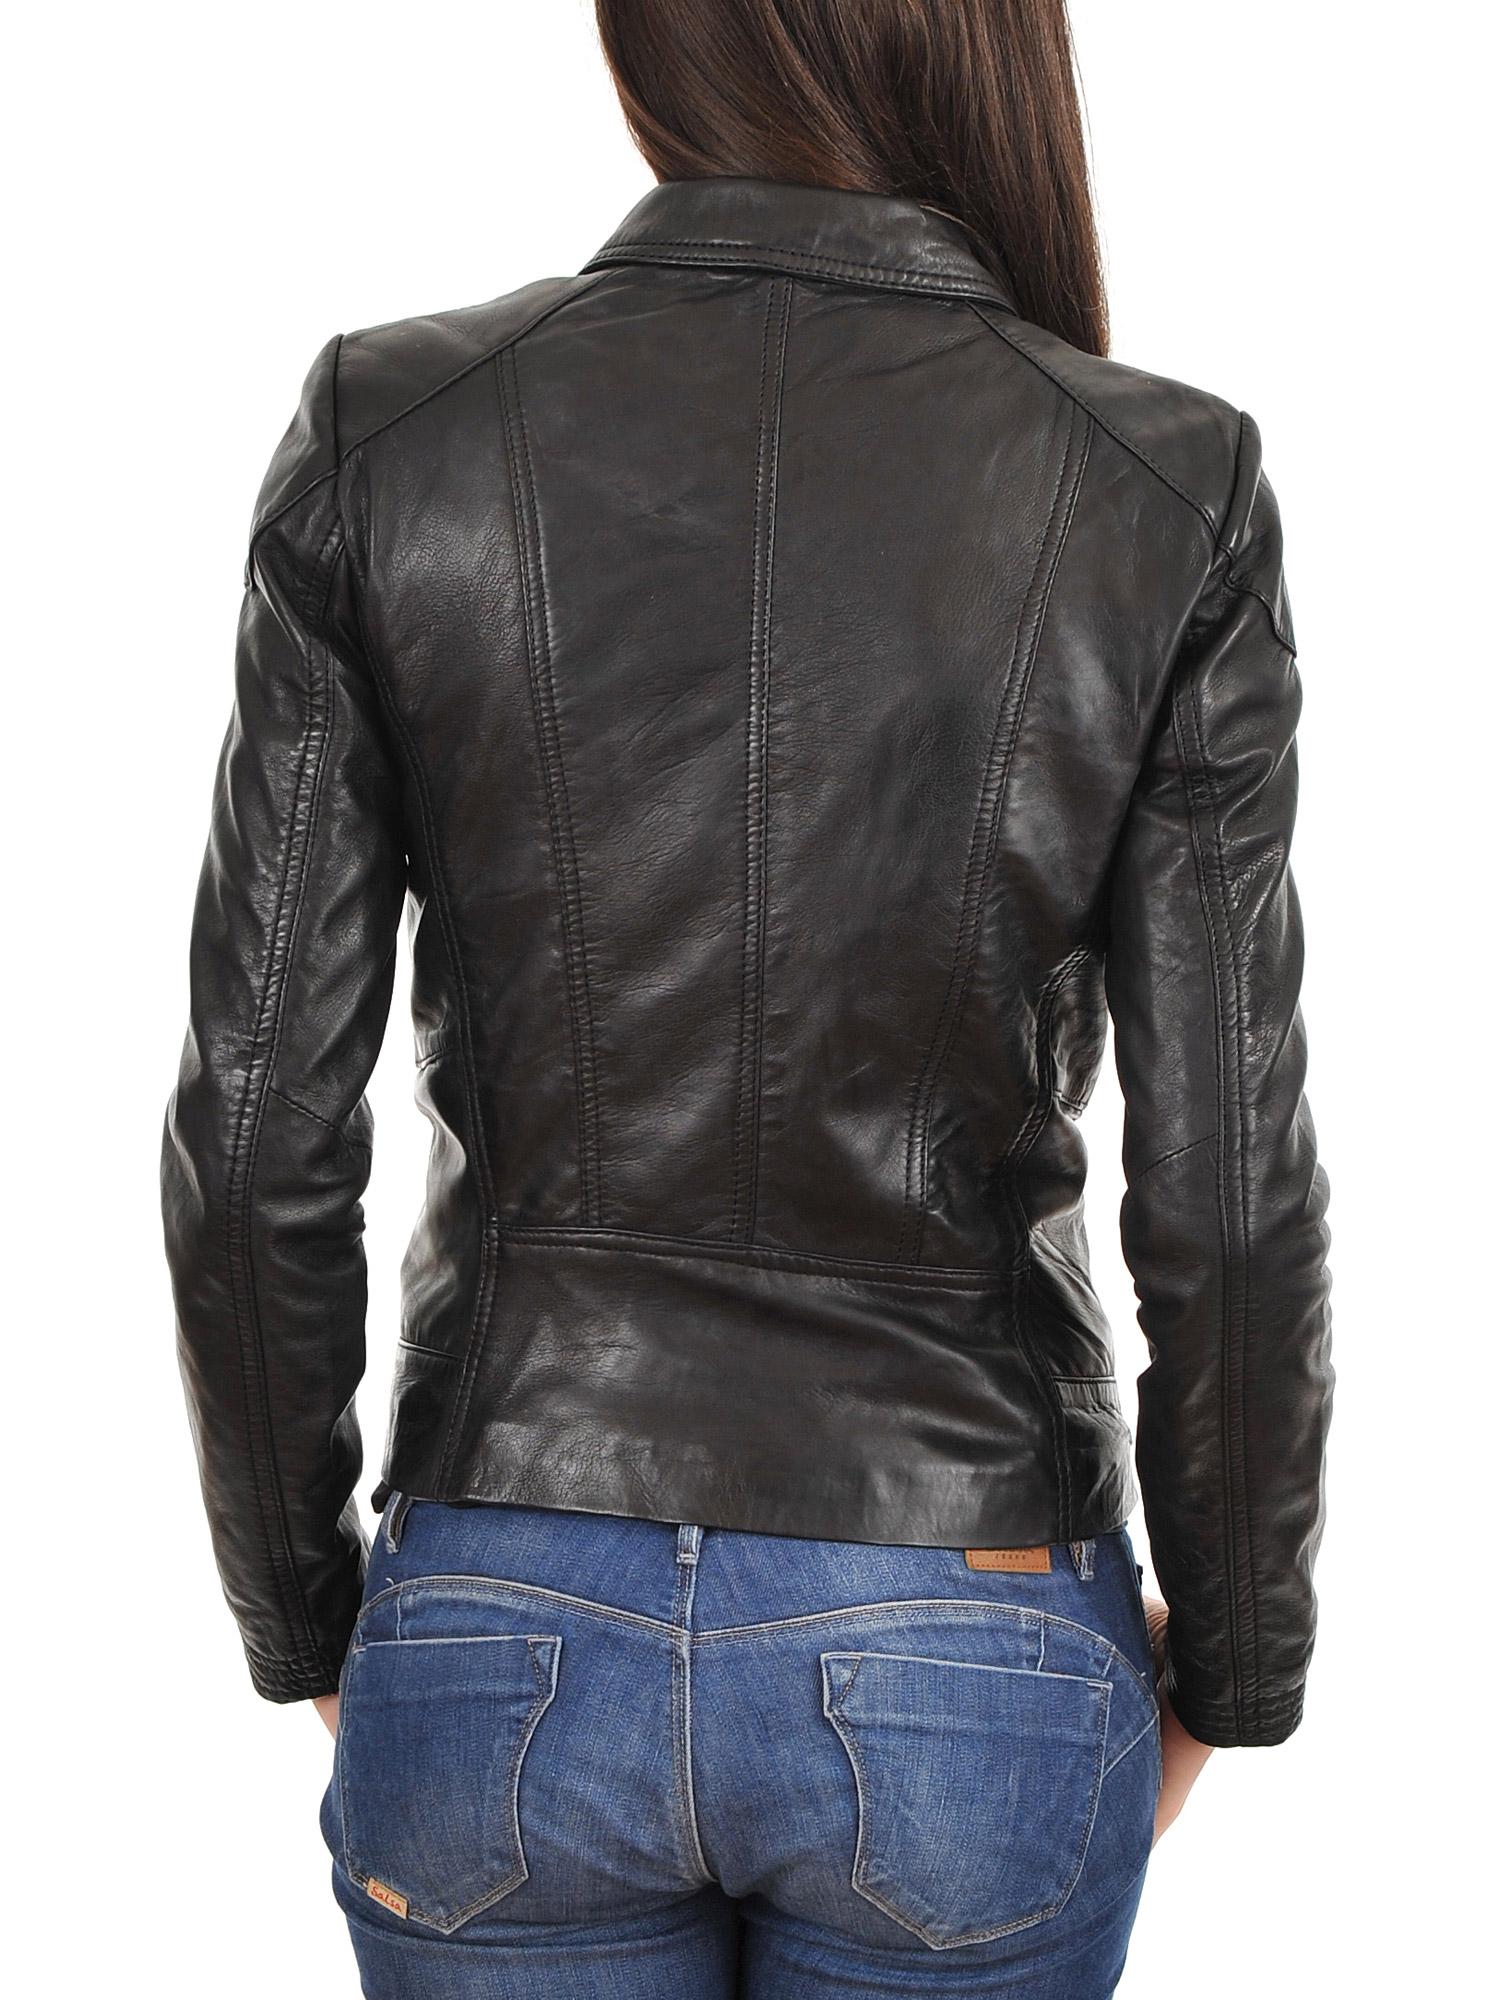 Womens leather jacket in sale – Modern fashion jacket photo blog